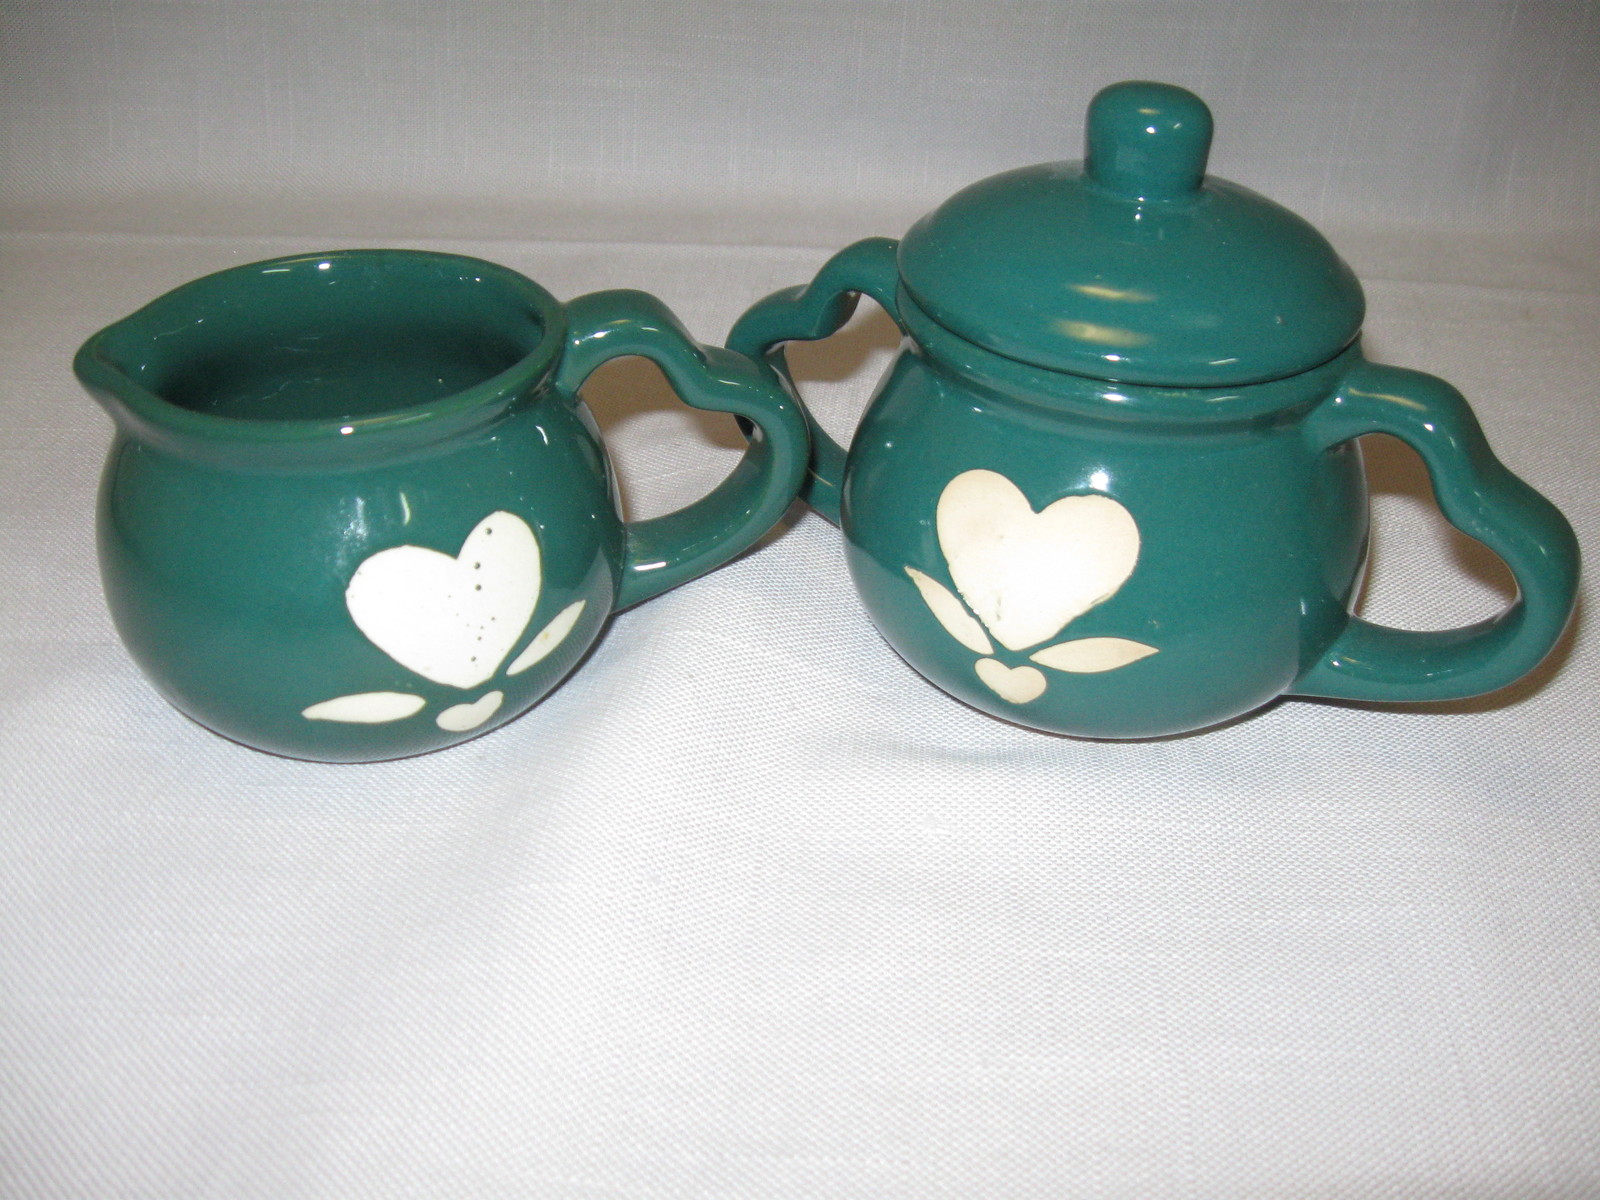 Emerald Green Cream & Sugar Set Heart Handles White Heart Design - $9.95